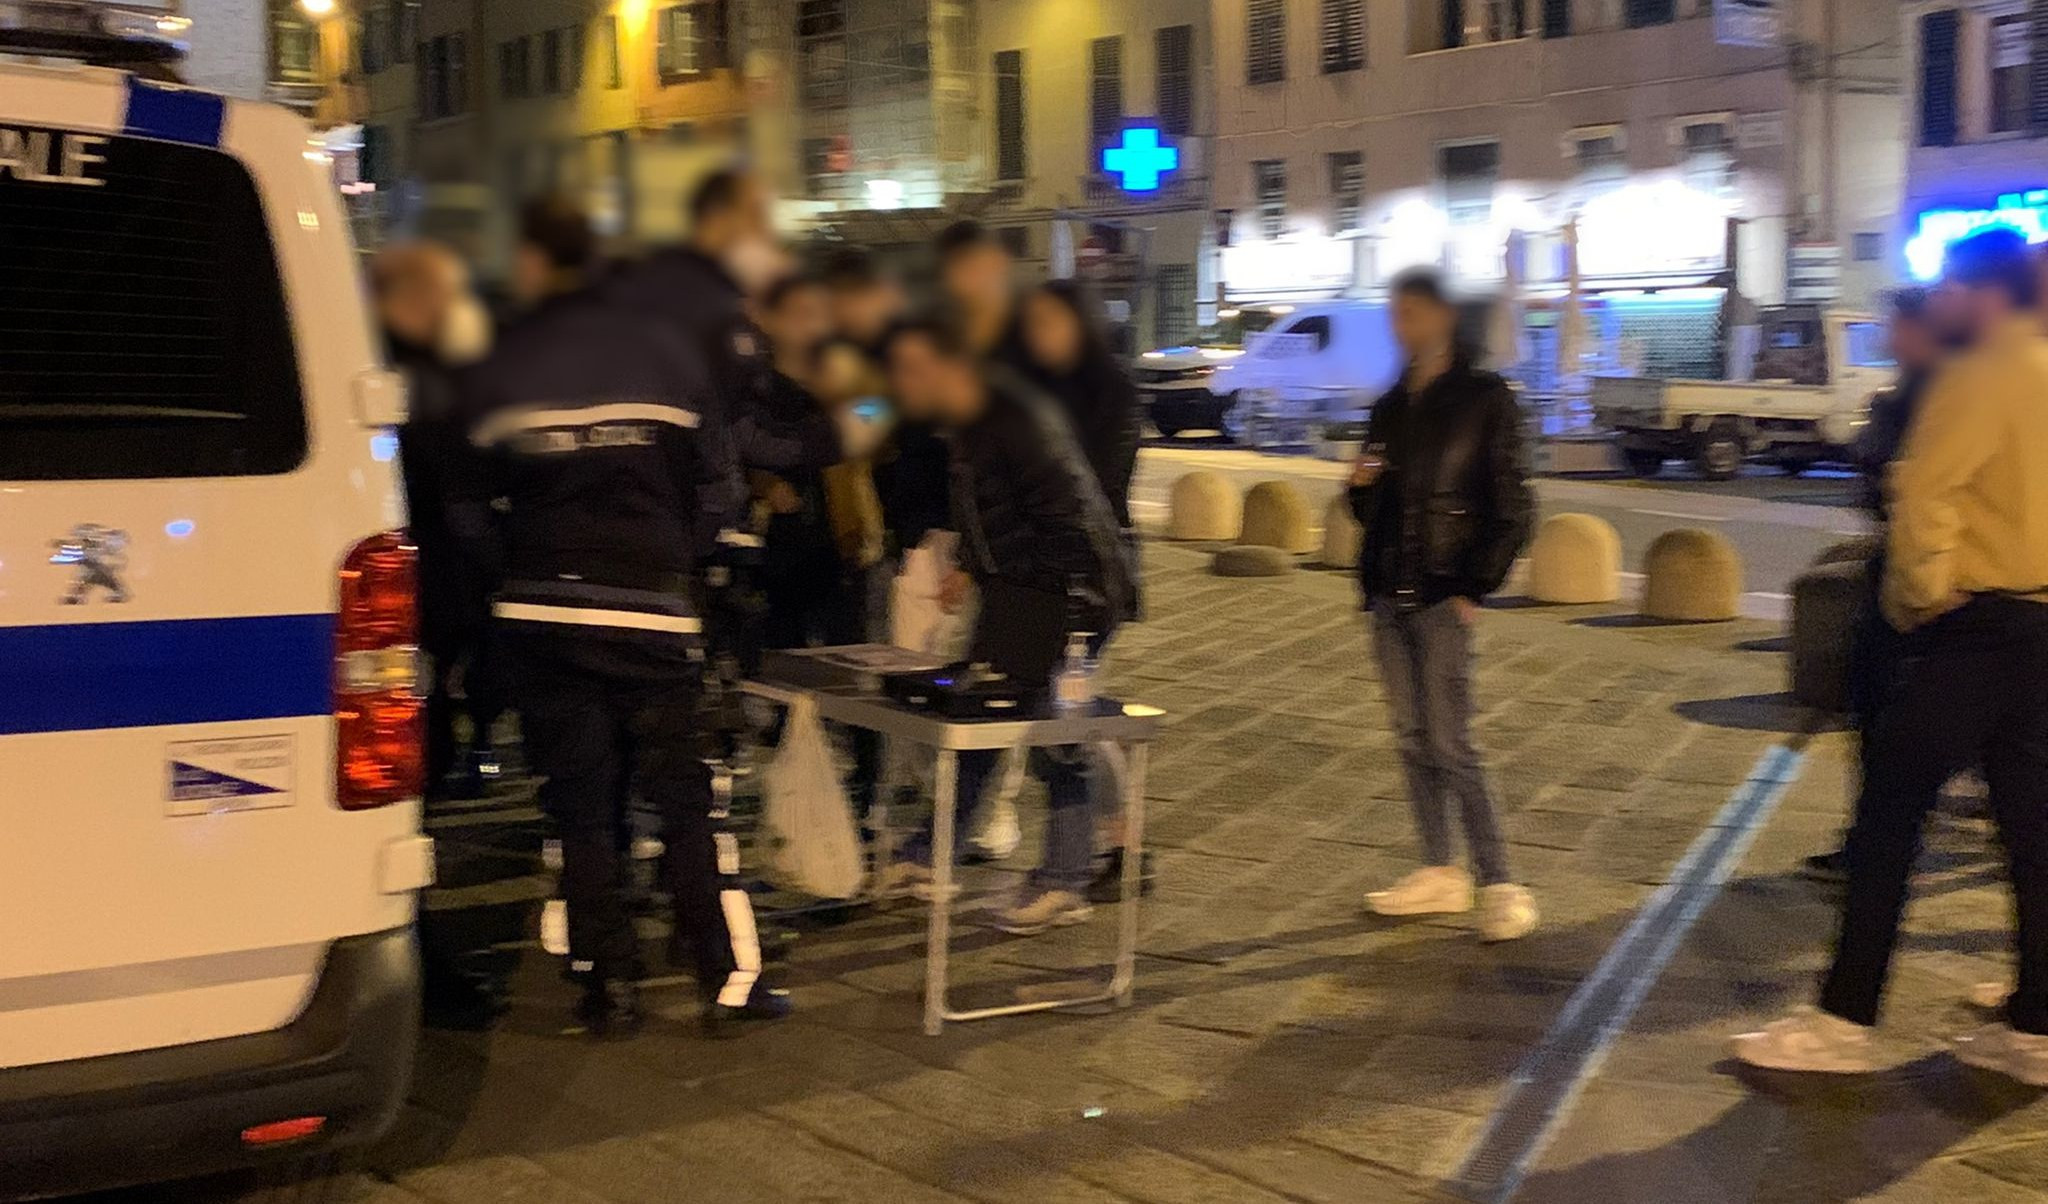 Alcool test gratis in piazza Matteotti a Genova: 